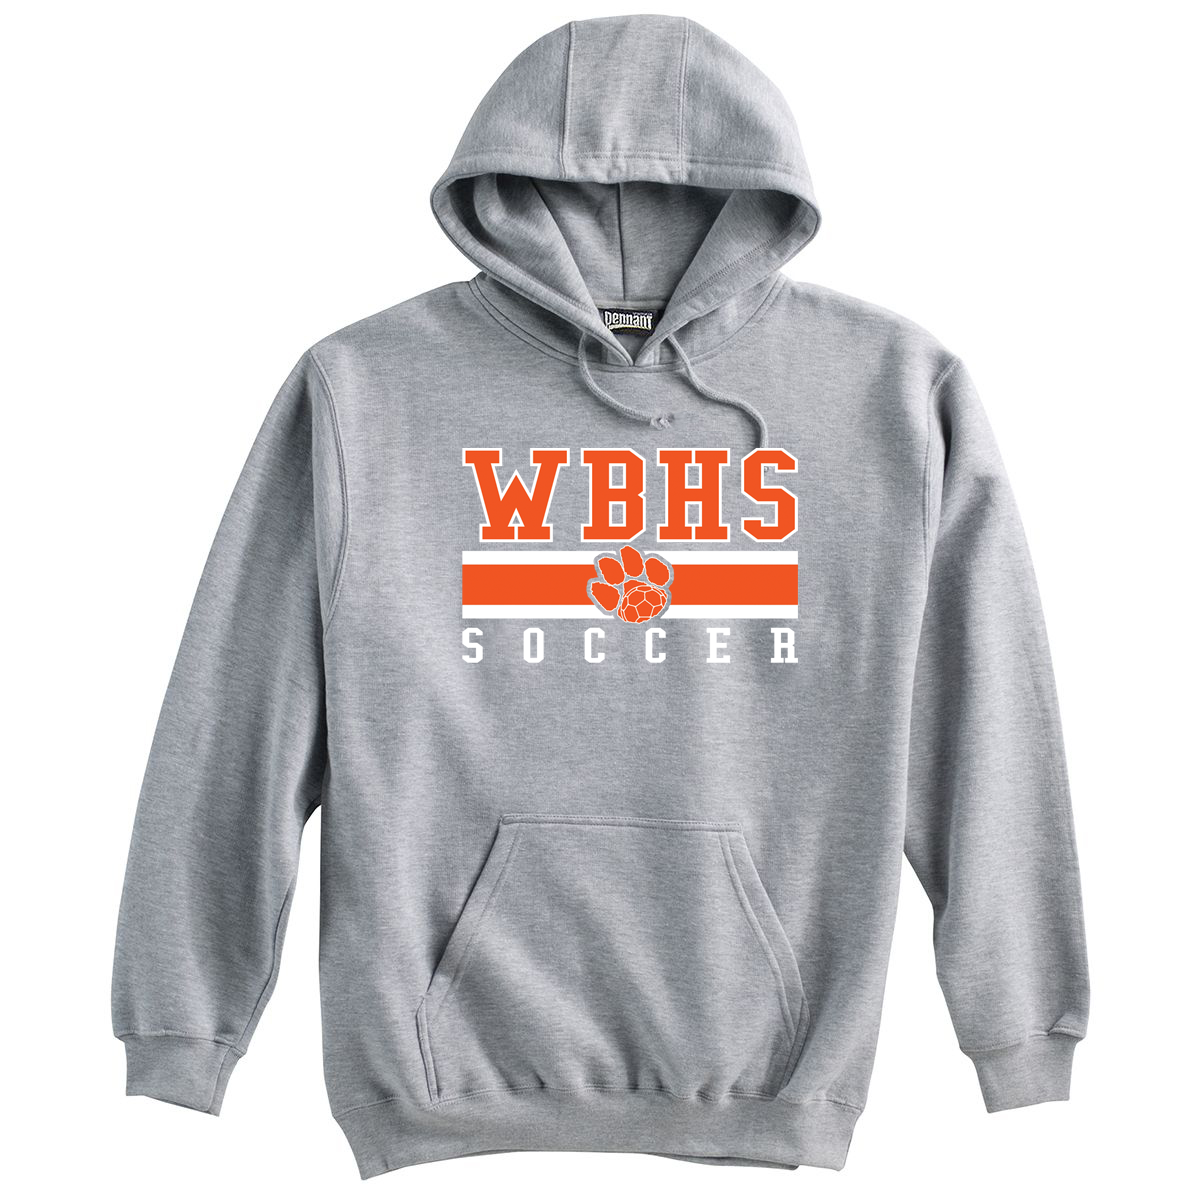 WBHS Boys Soccer  Sweatshirt